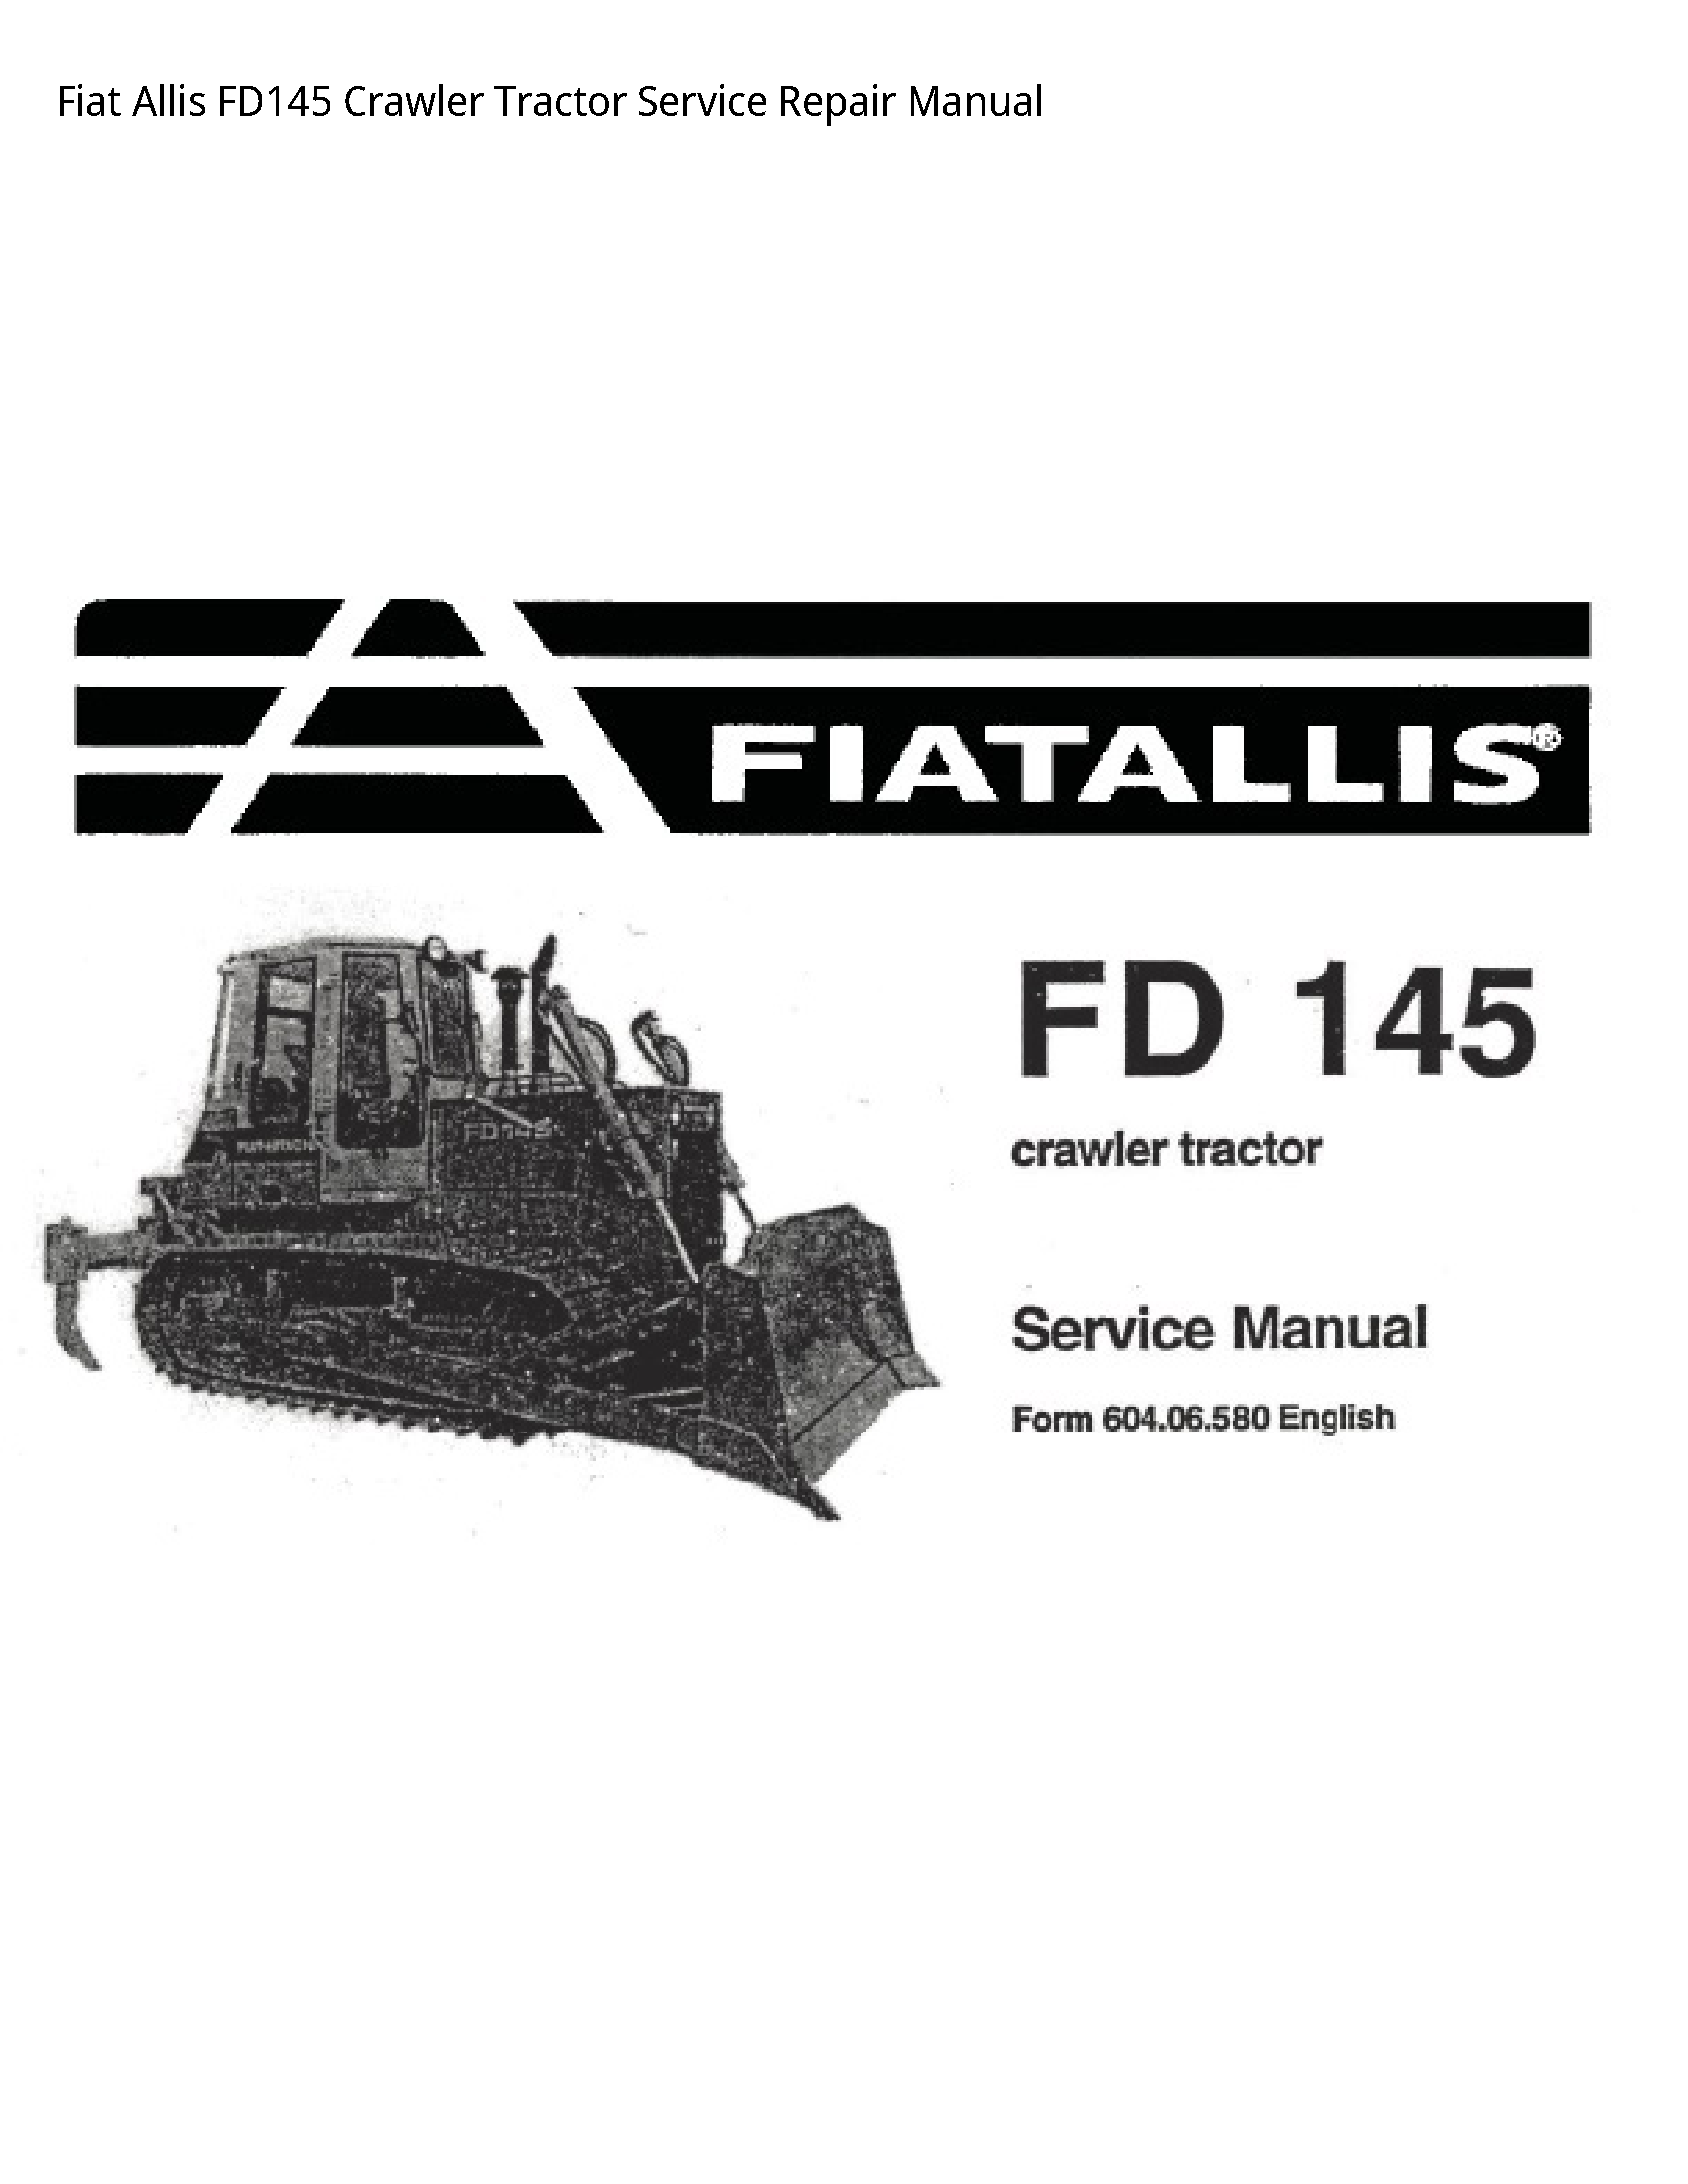 Fiat Allis FD145 Crawler Tractor manual